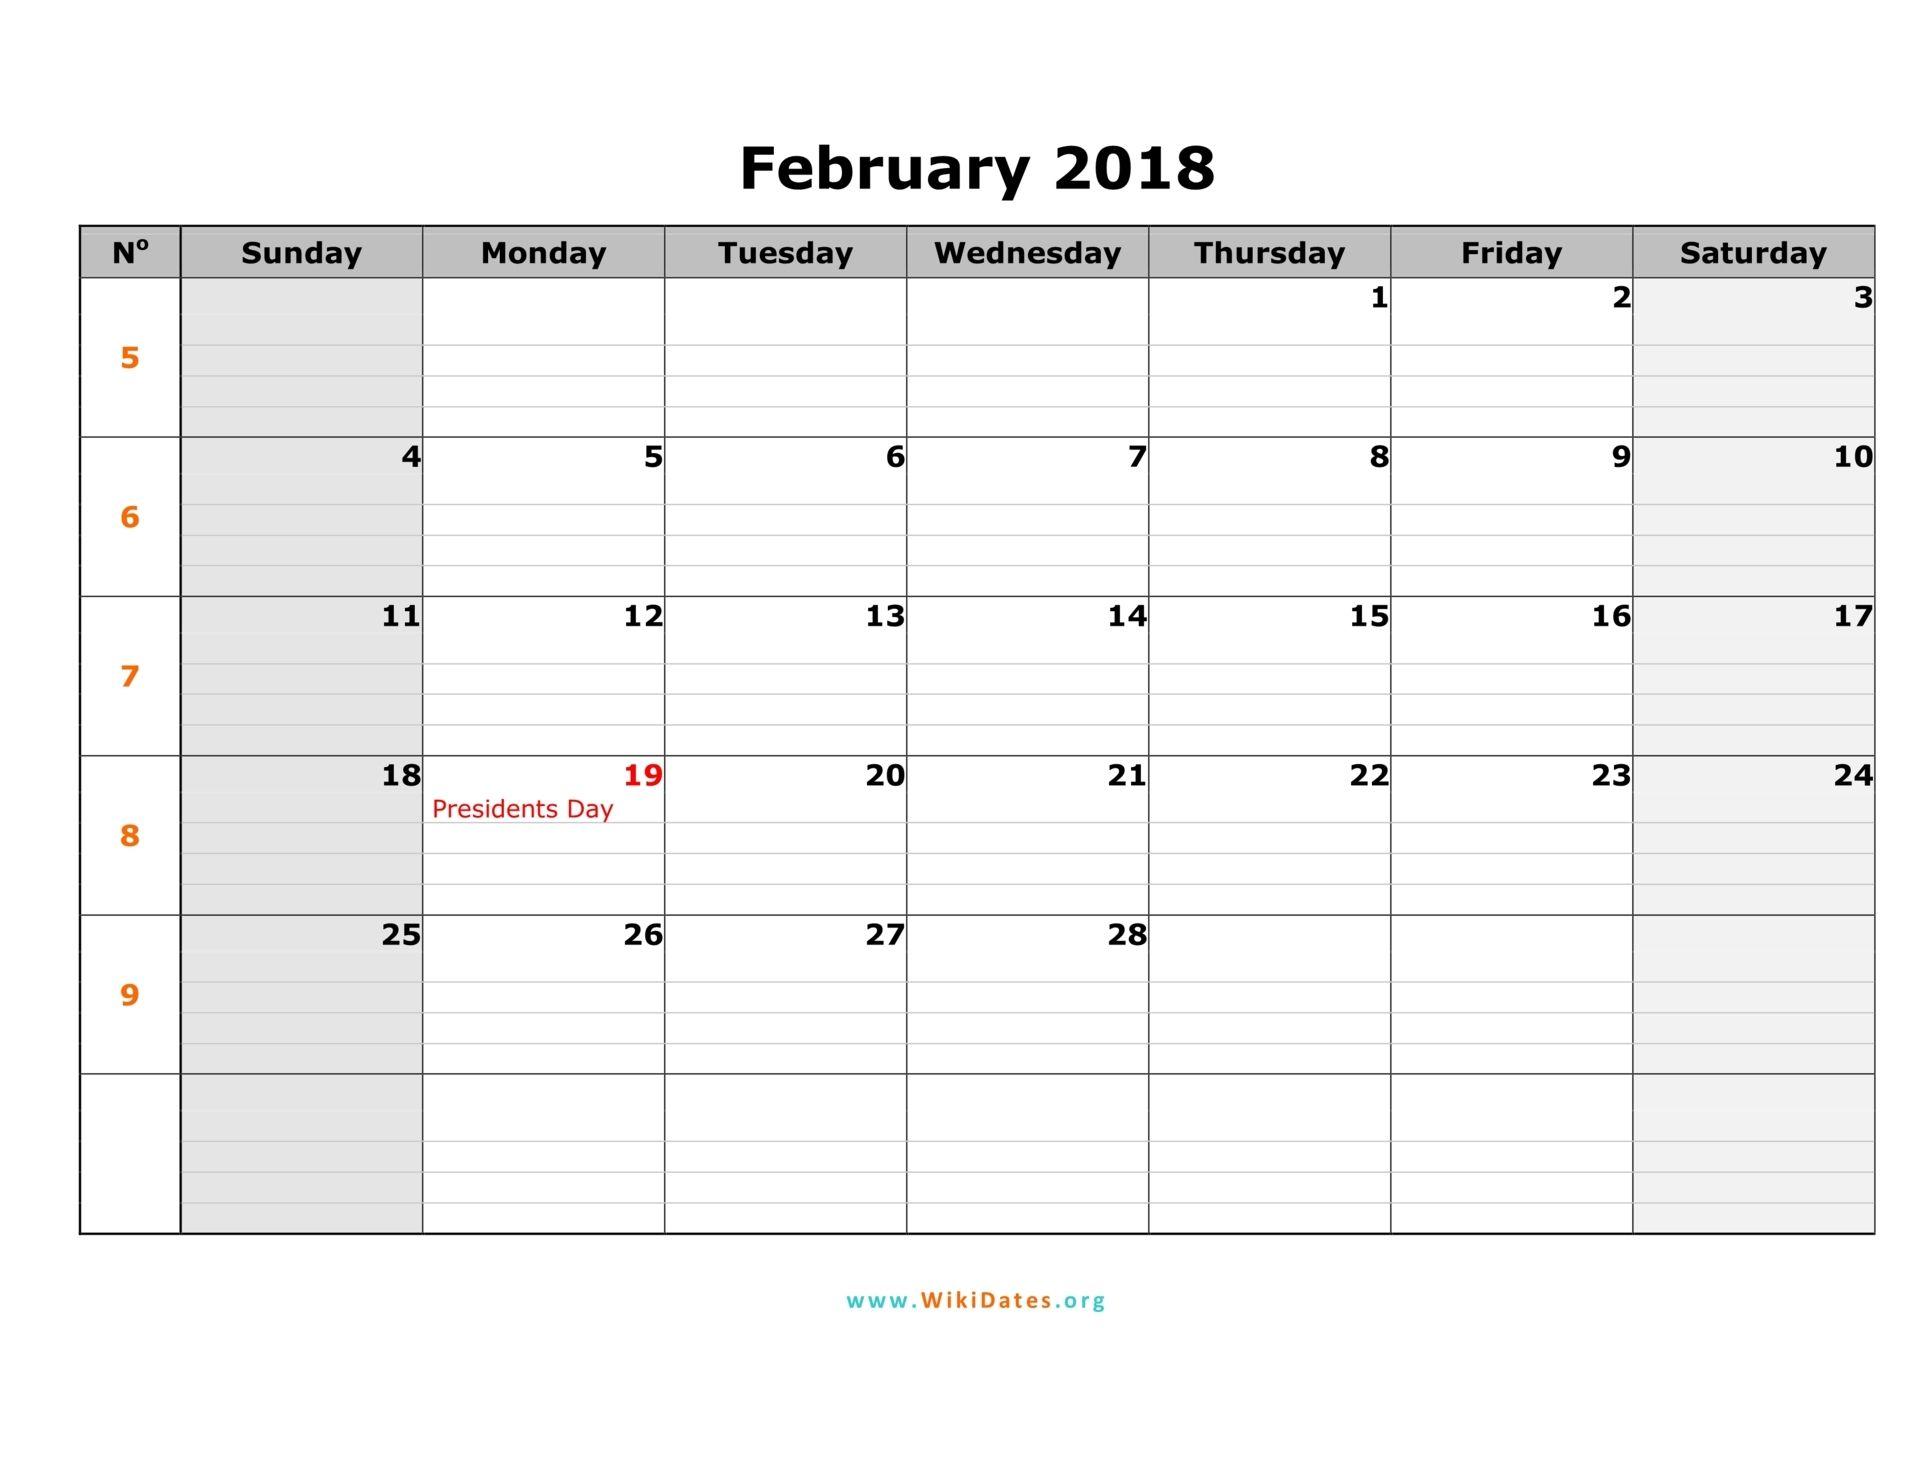 February 2018 Calendar With Holidays calendar printable